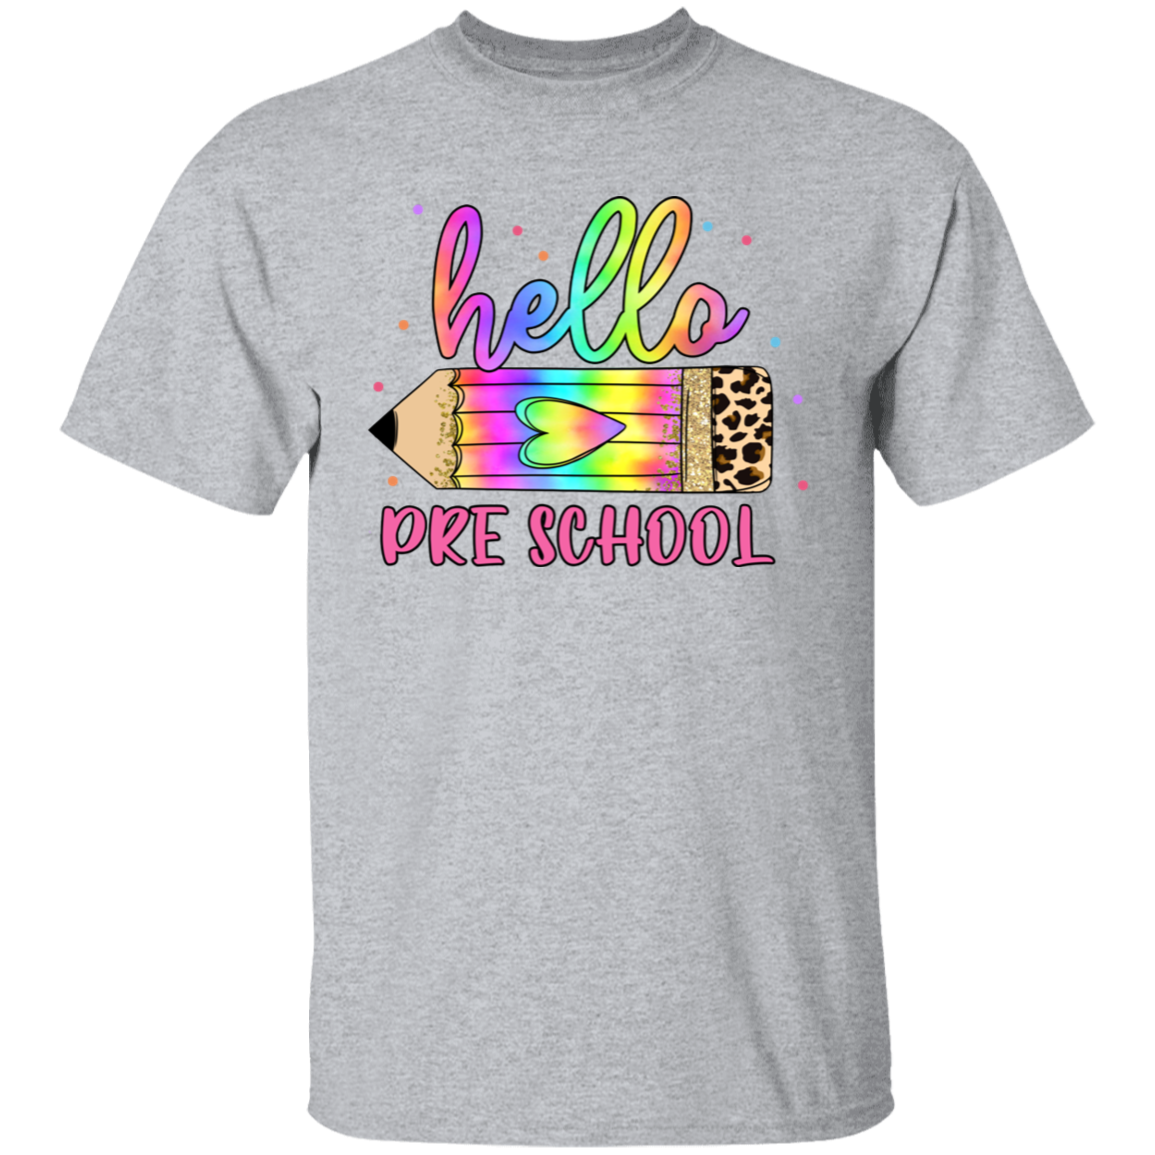 Preschool Youth 100% Cotton T-Shirt